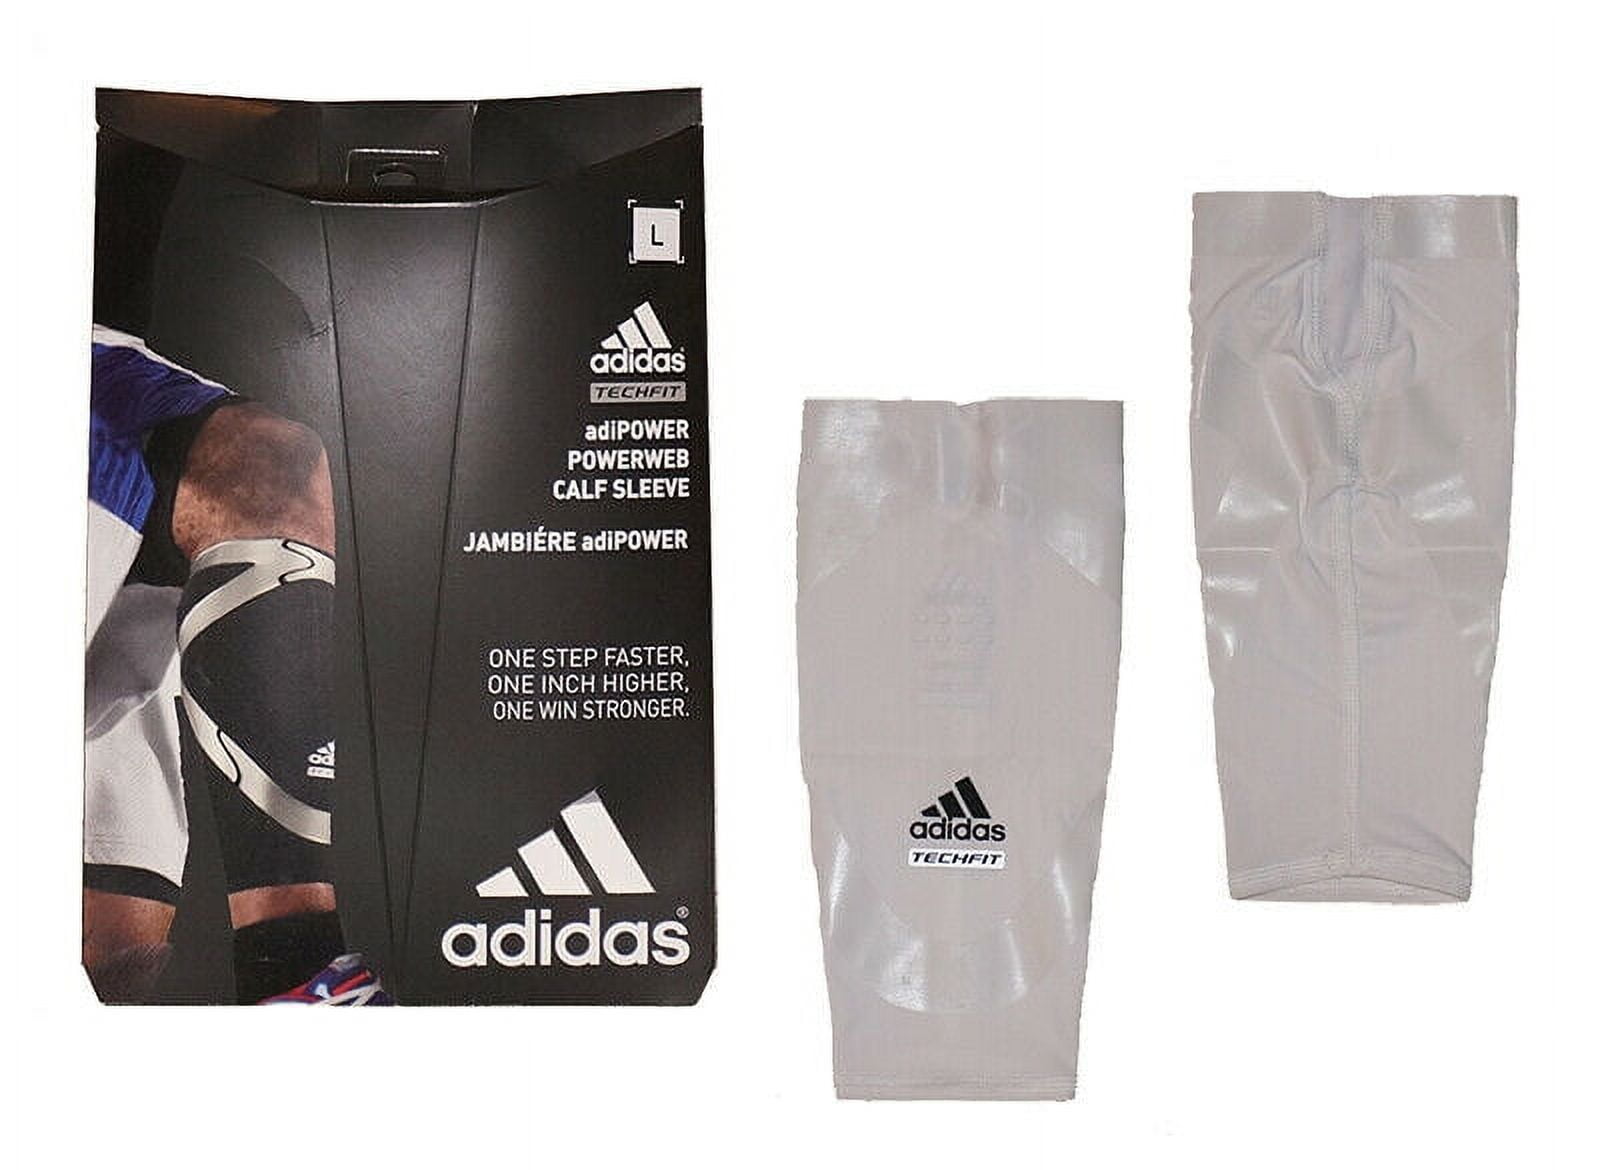 Adidas Men's Techfit Basketball Powerweb Compression Calf Sleeve